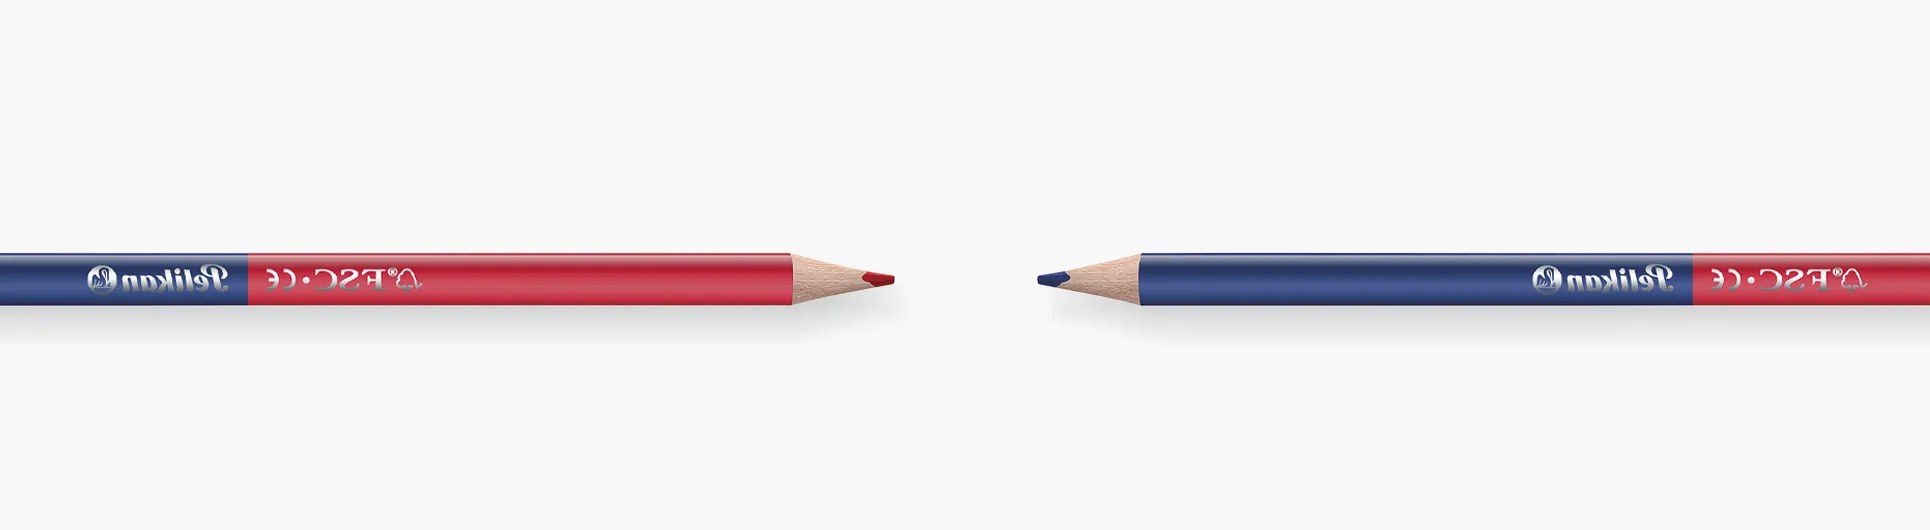 Dikke, driehoekige potloden rood & blauw